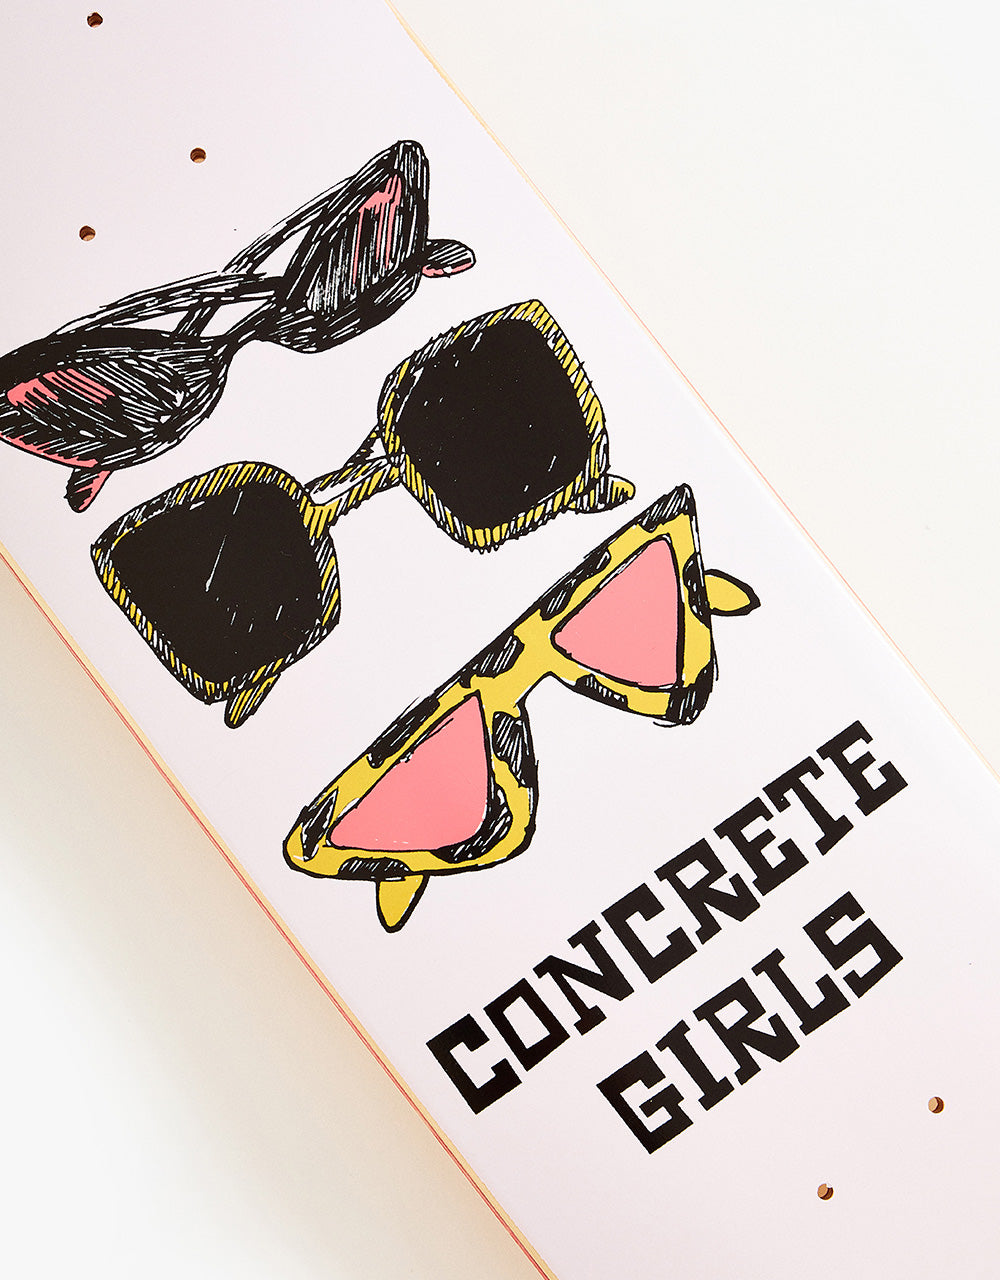 Concrete Girls Sunglasses Skateboard Deck - 8"